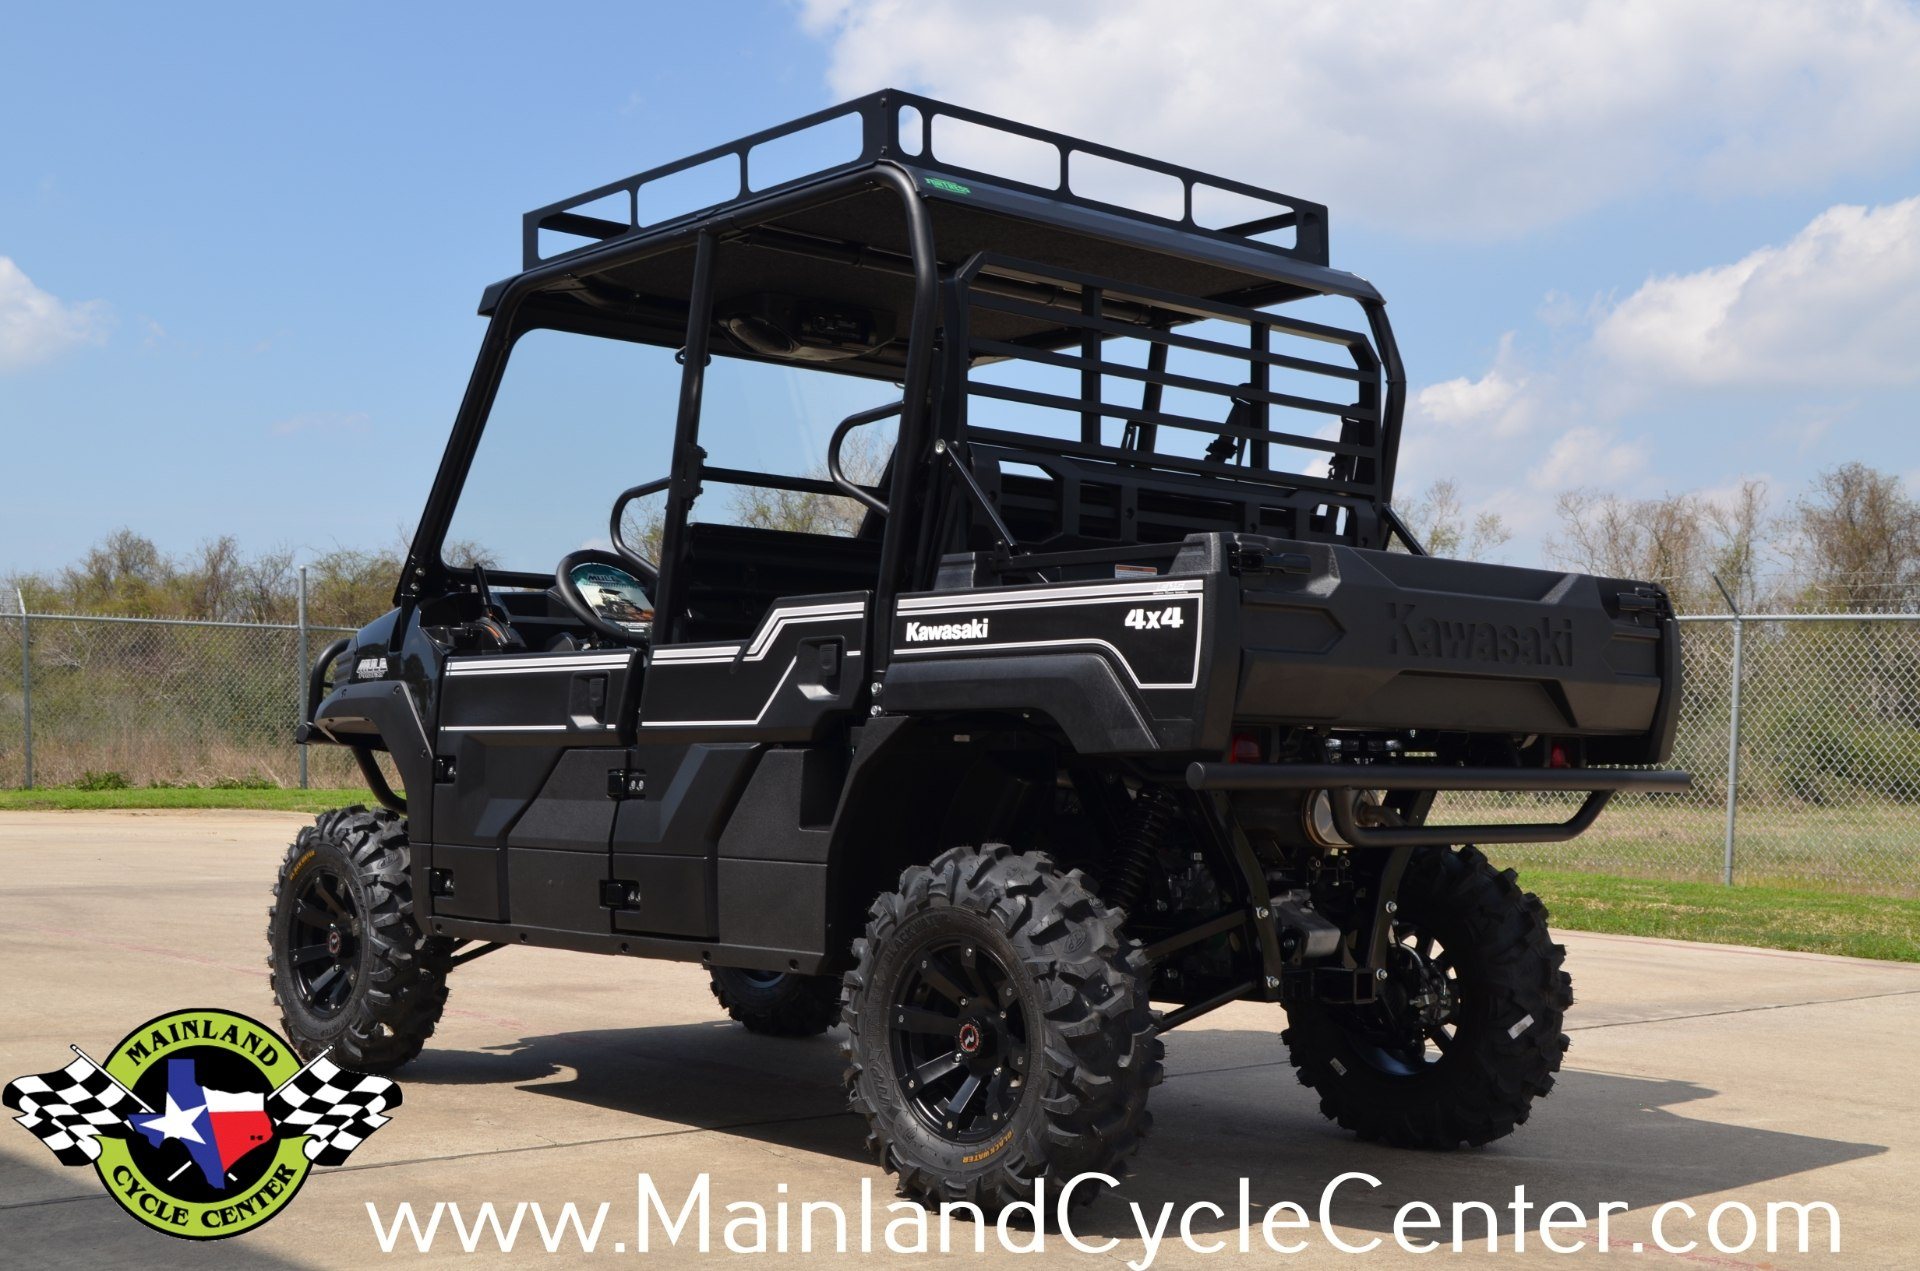 2016 Kawasaki Mule Pro-FXT EPS in La Marque, Texas - Photo 7